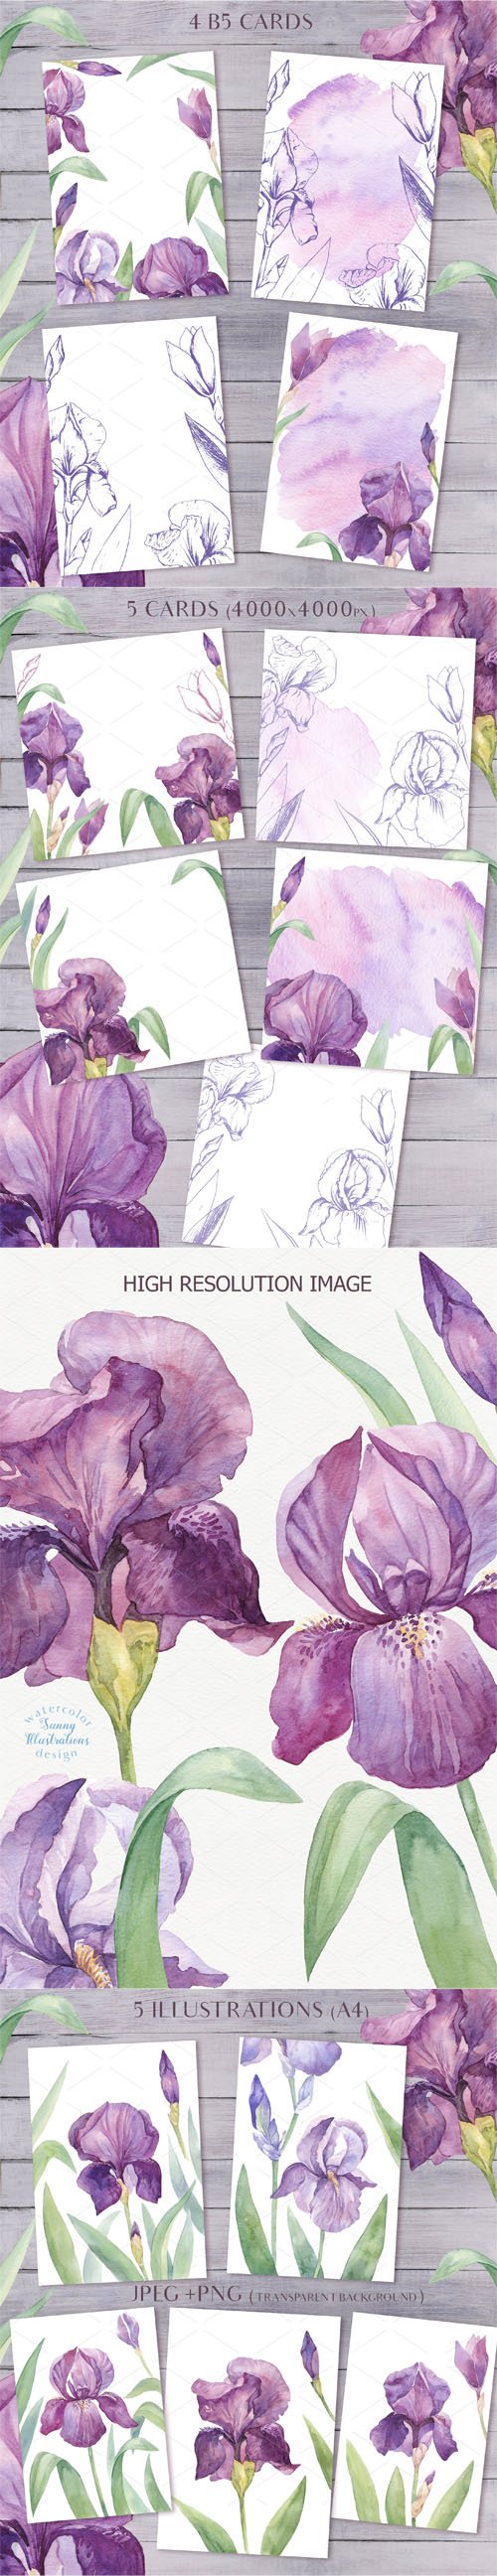 Violet Blossom - Watercolor Vector Graphic Set